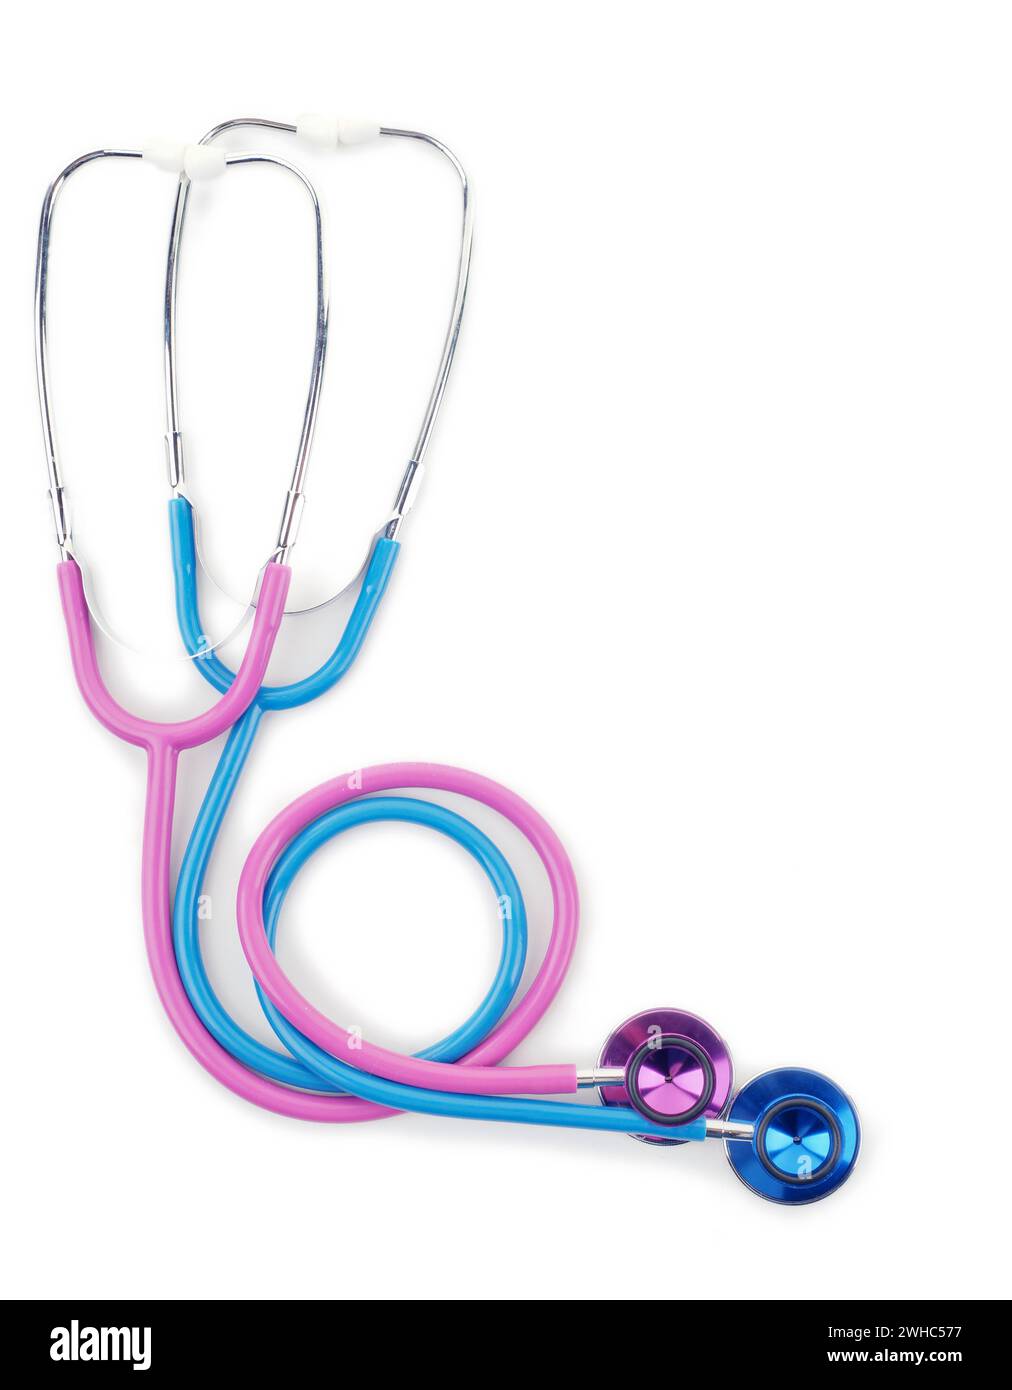 Rosafarbene und blaue Stethoskope Stockfoto